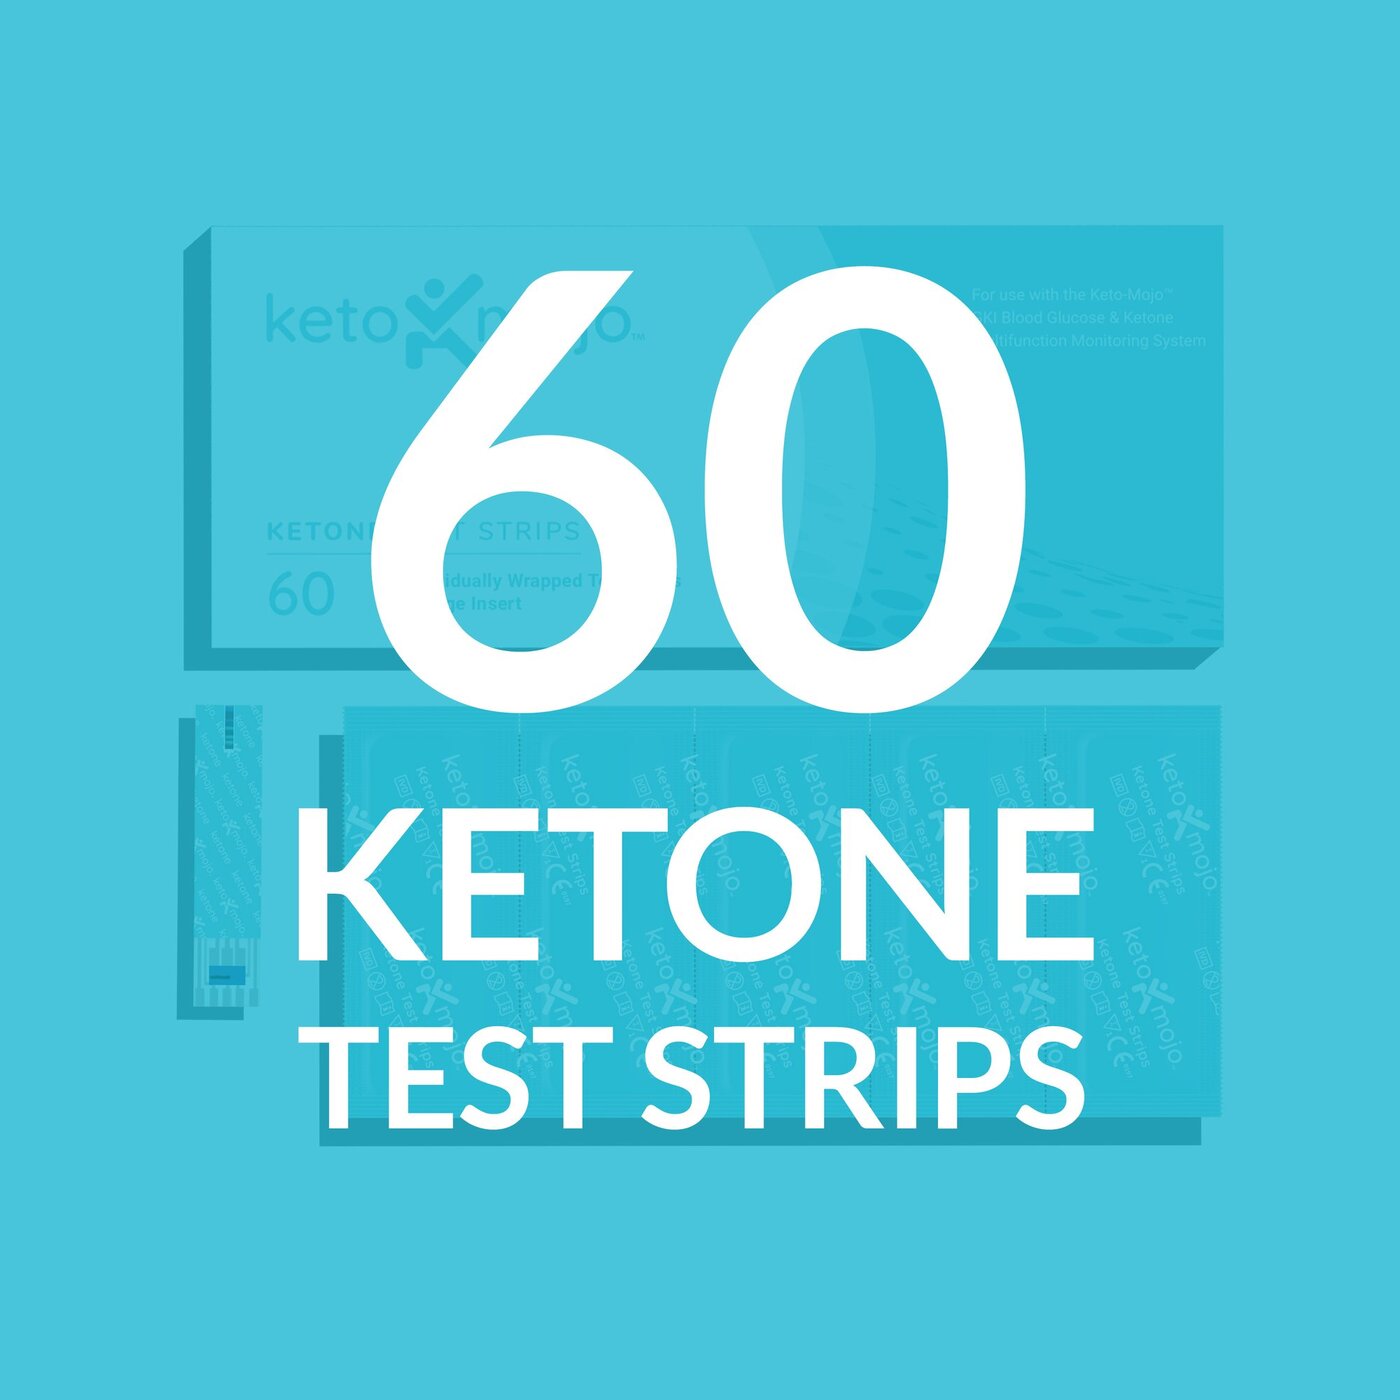 Keto-Mojo Ketone test strips